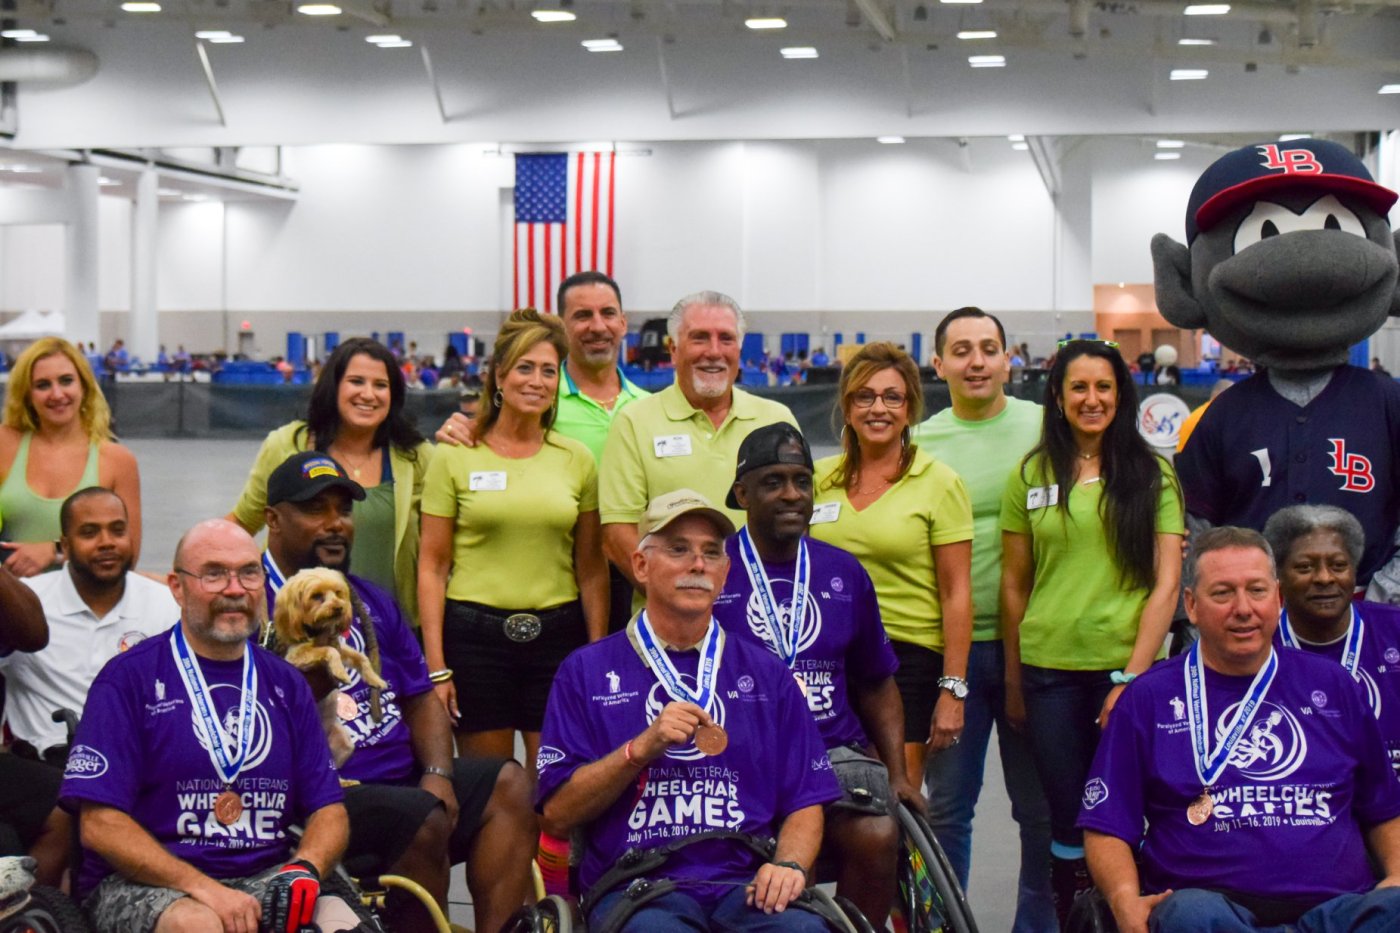 DeGasperis family with Veteran Athletes at the National Veterans Wheelchair Games